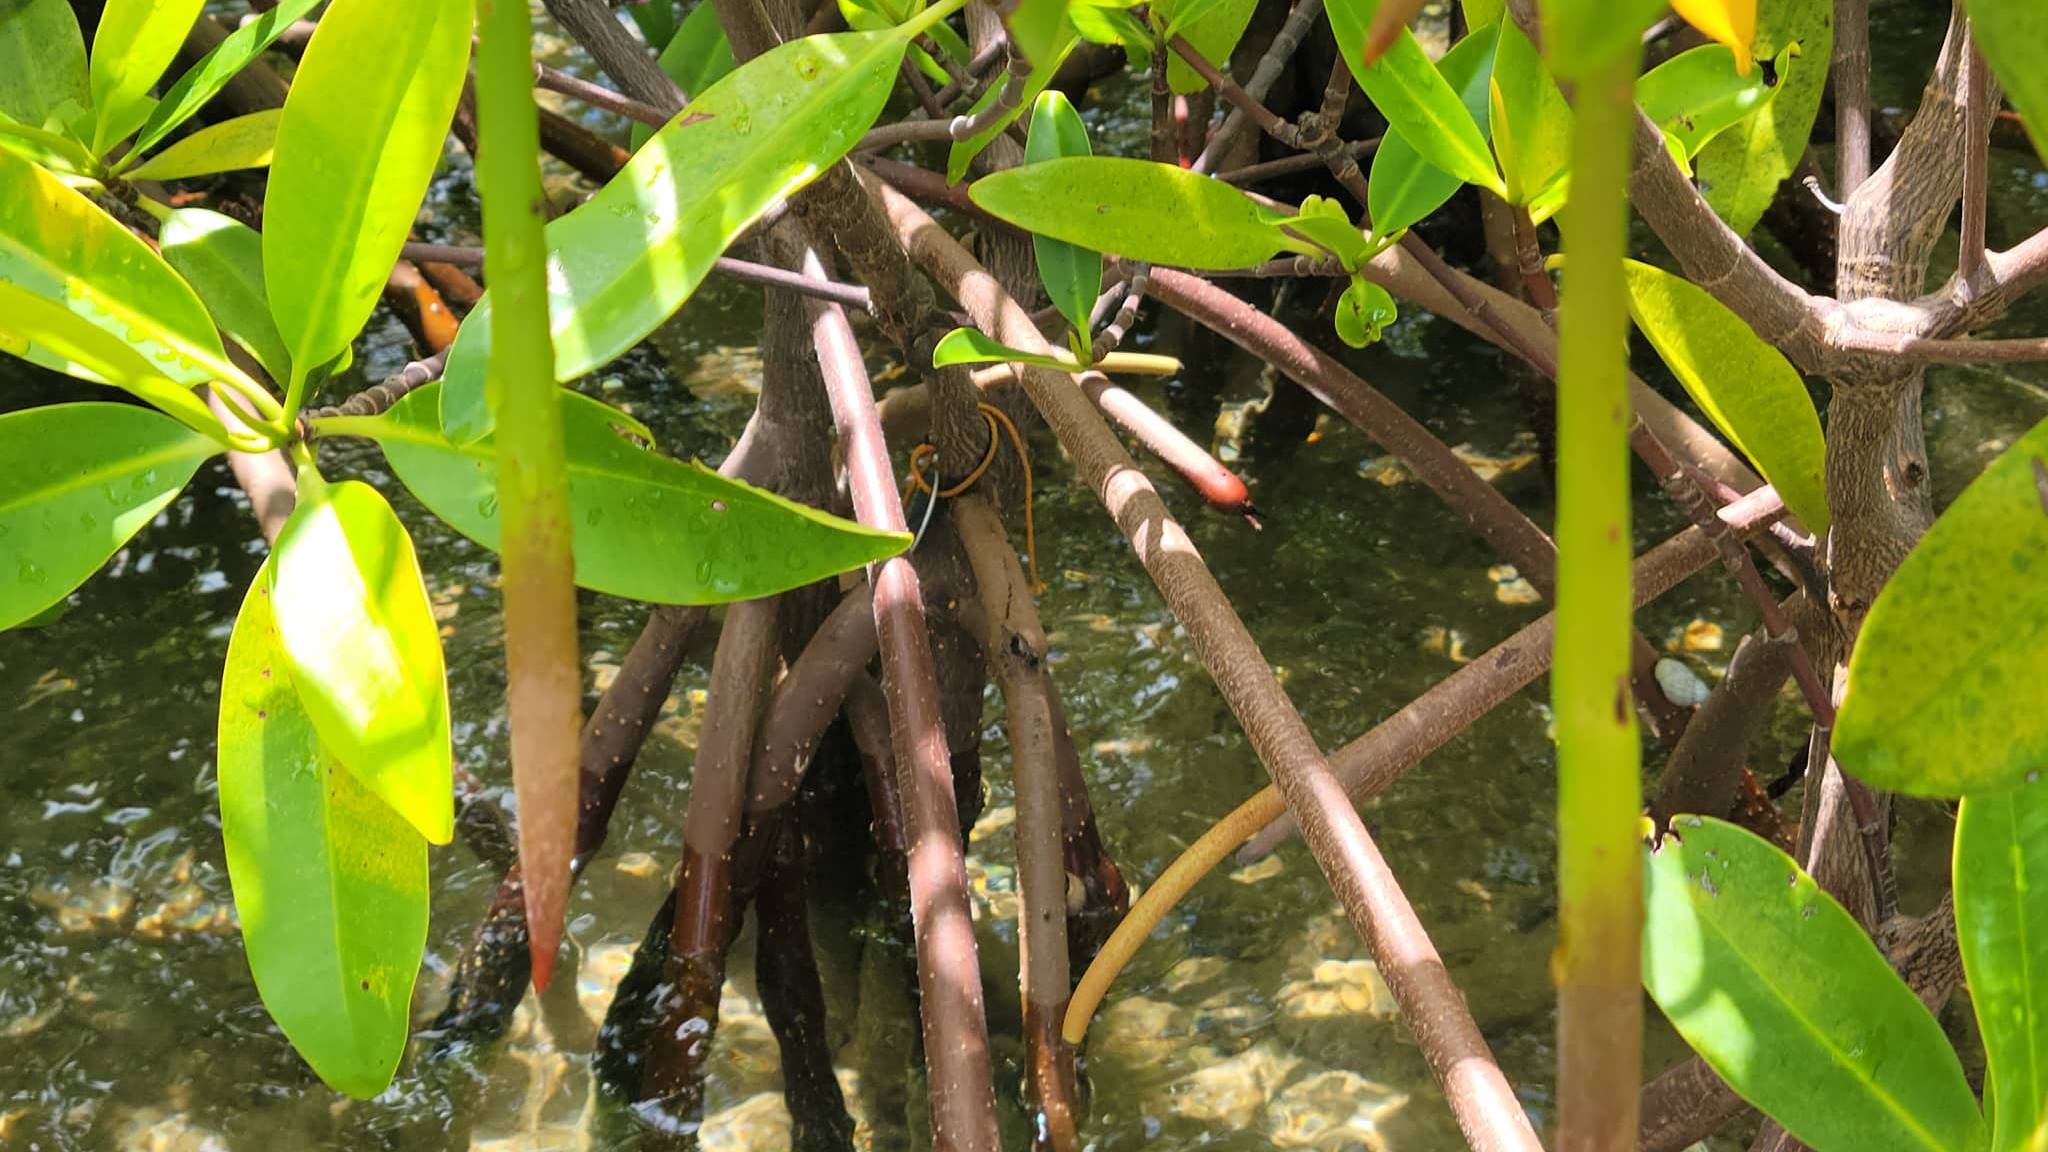 Red mangrove propagules